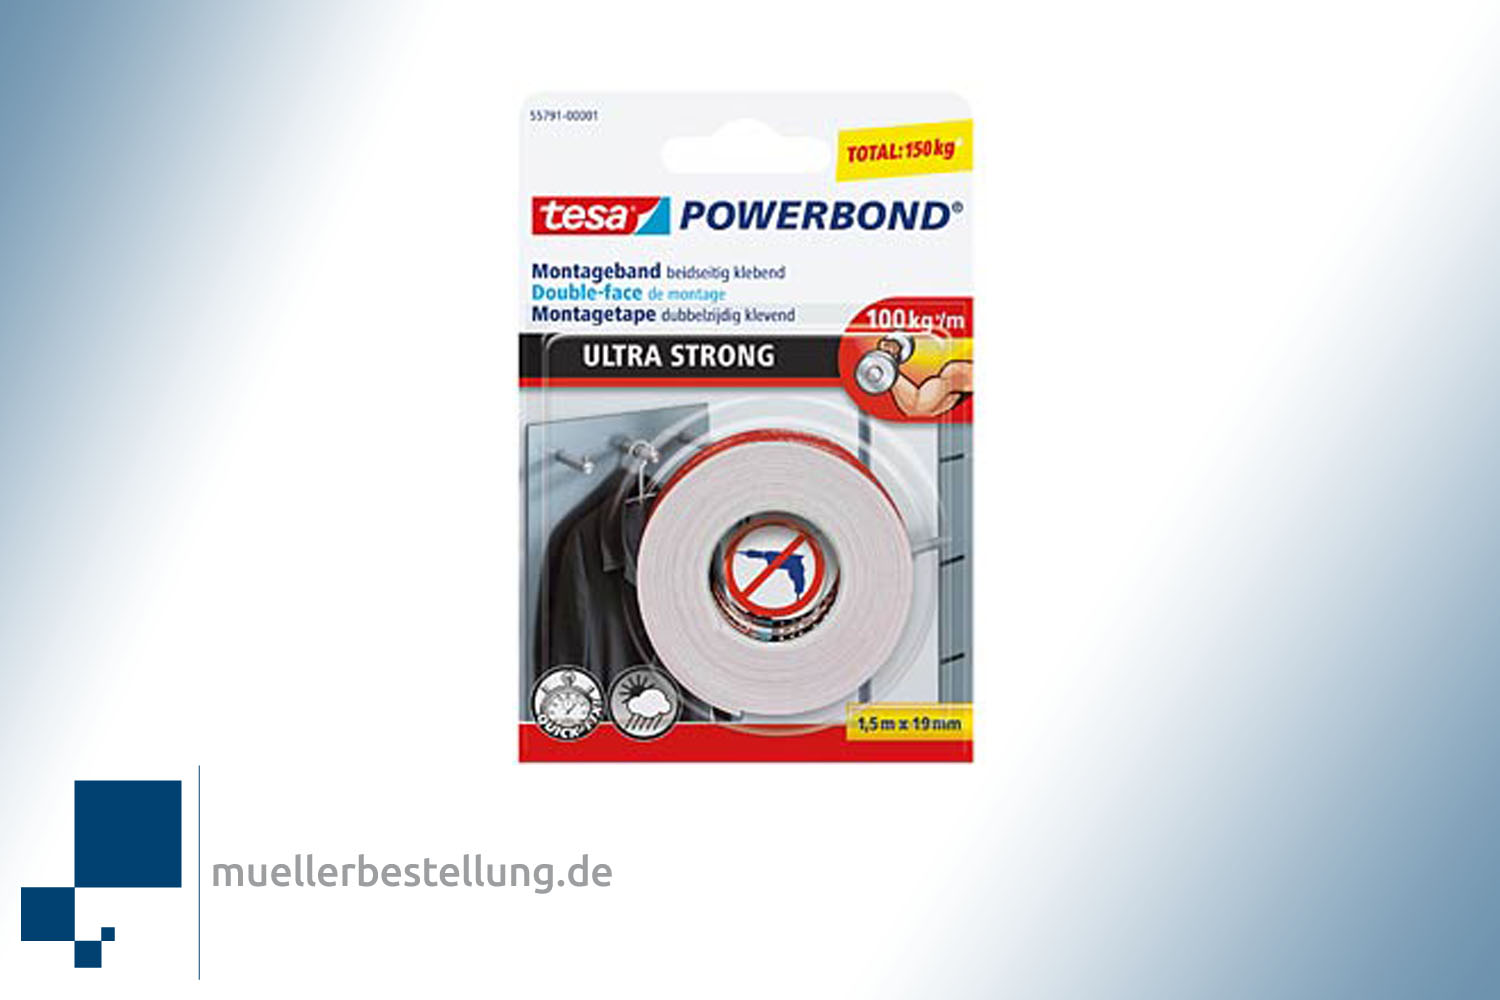 TESA 55791 Montageband tesa Powerbond® Ultra Strong, 1,5 m x 19 mm